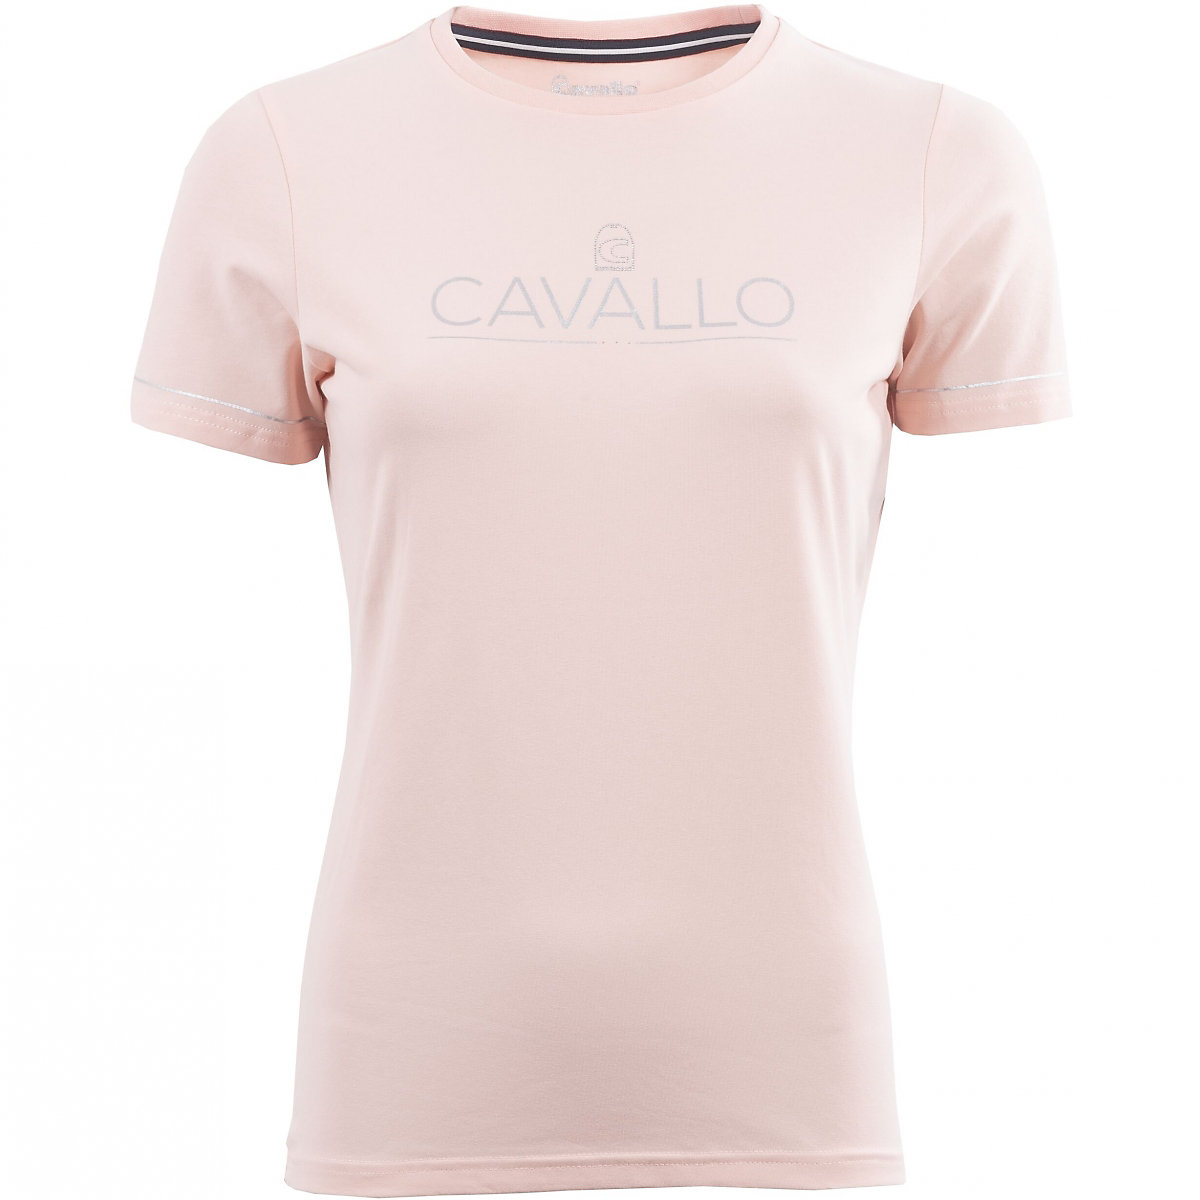 Cavallo Cavallo FERUN Auffälliges Damen T-Shirt bright salmon Sportswear FS 23 36 rosa